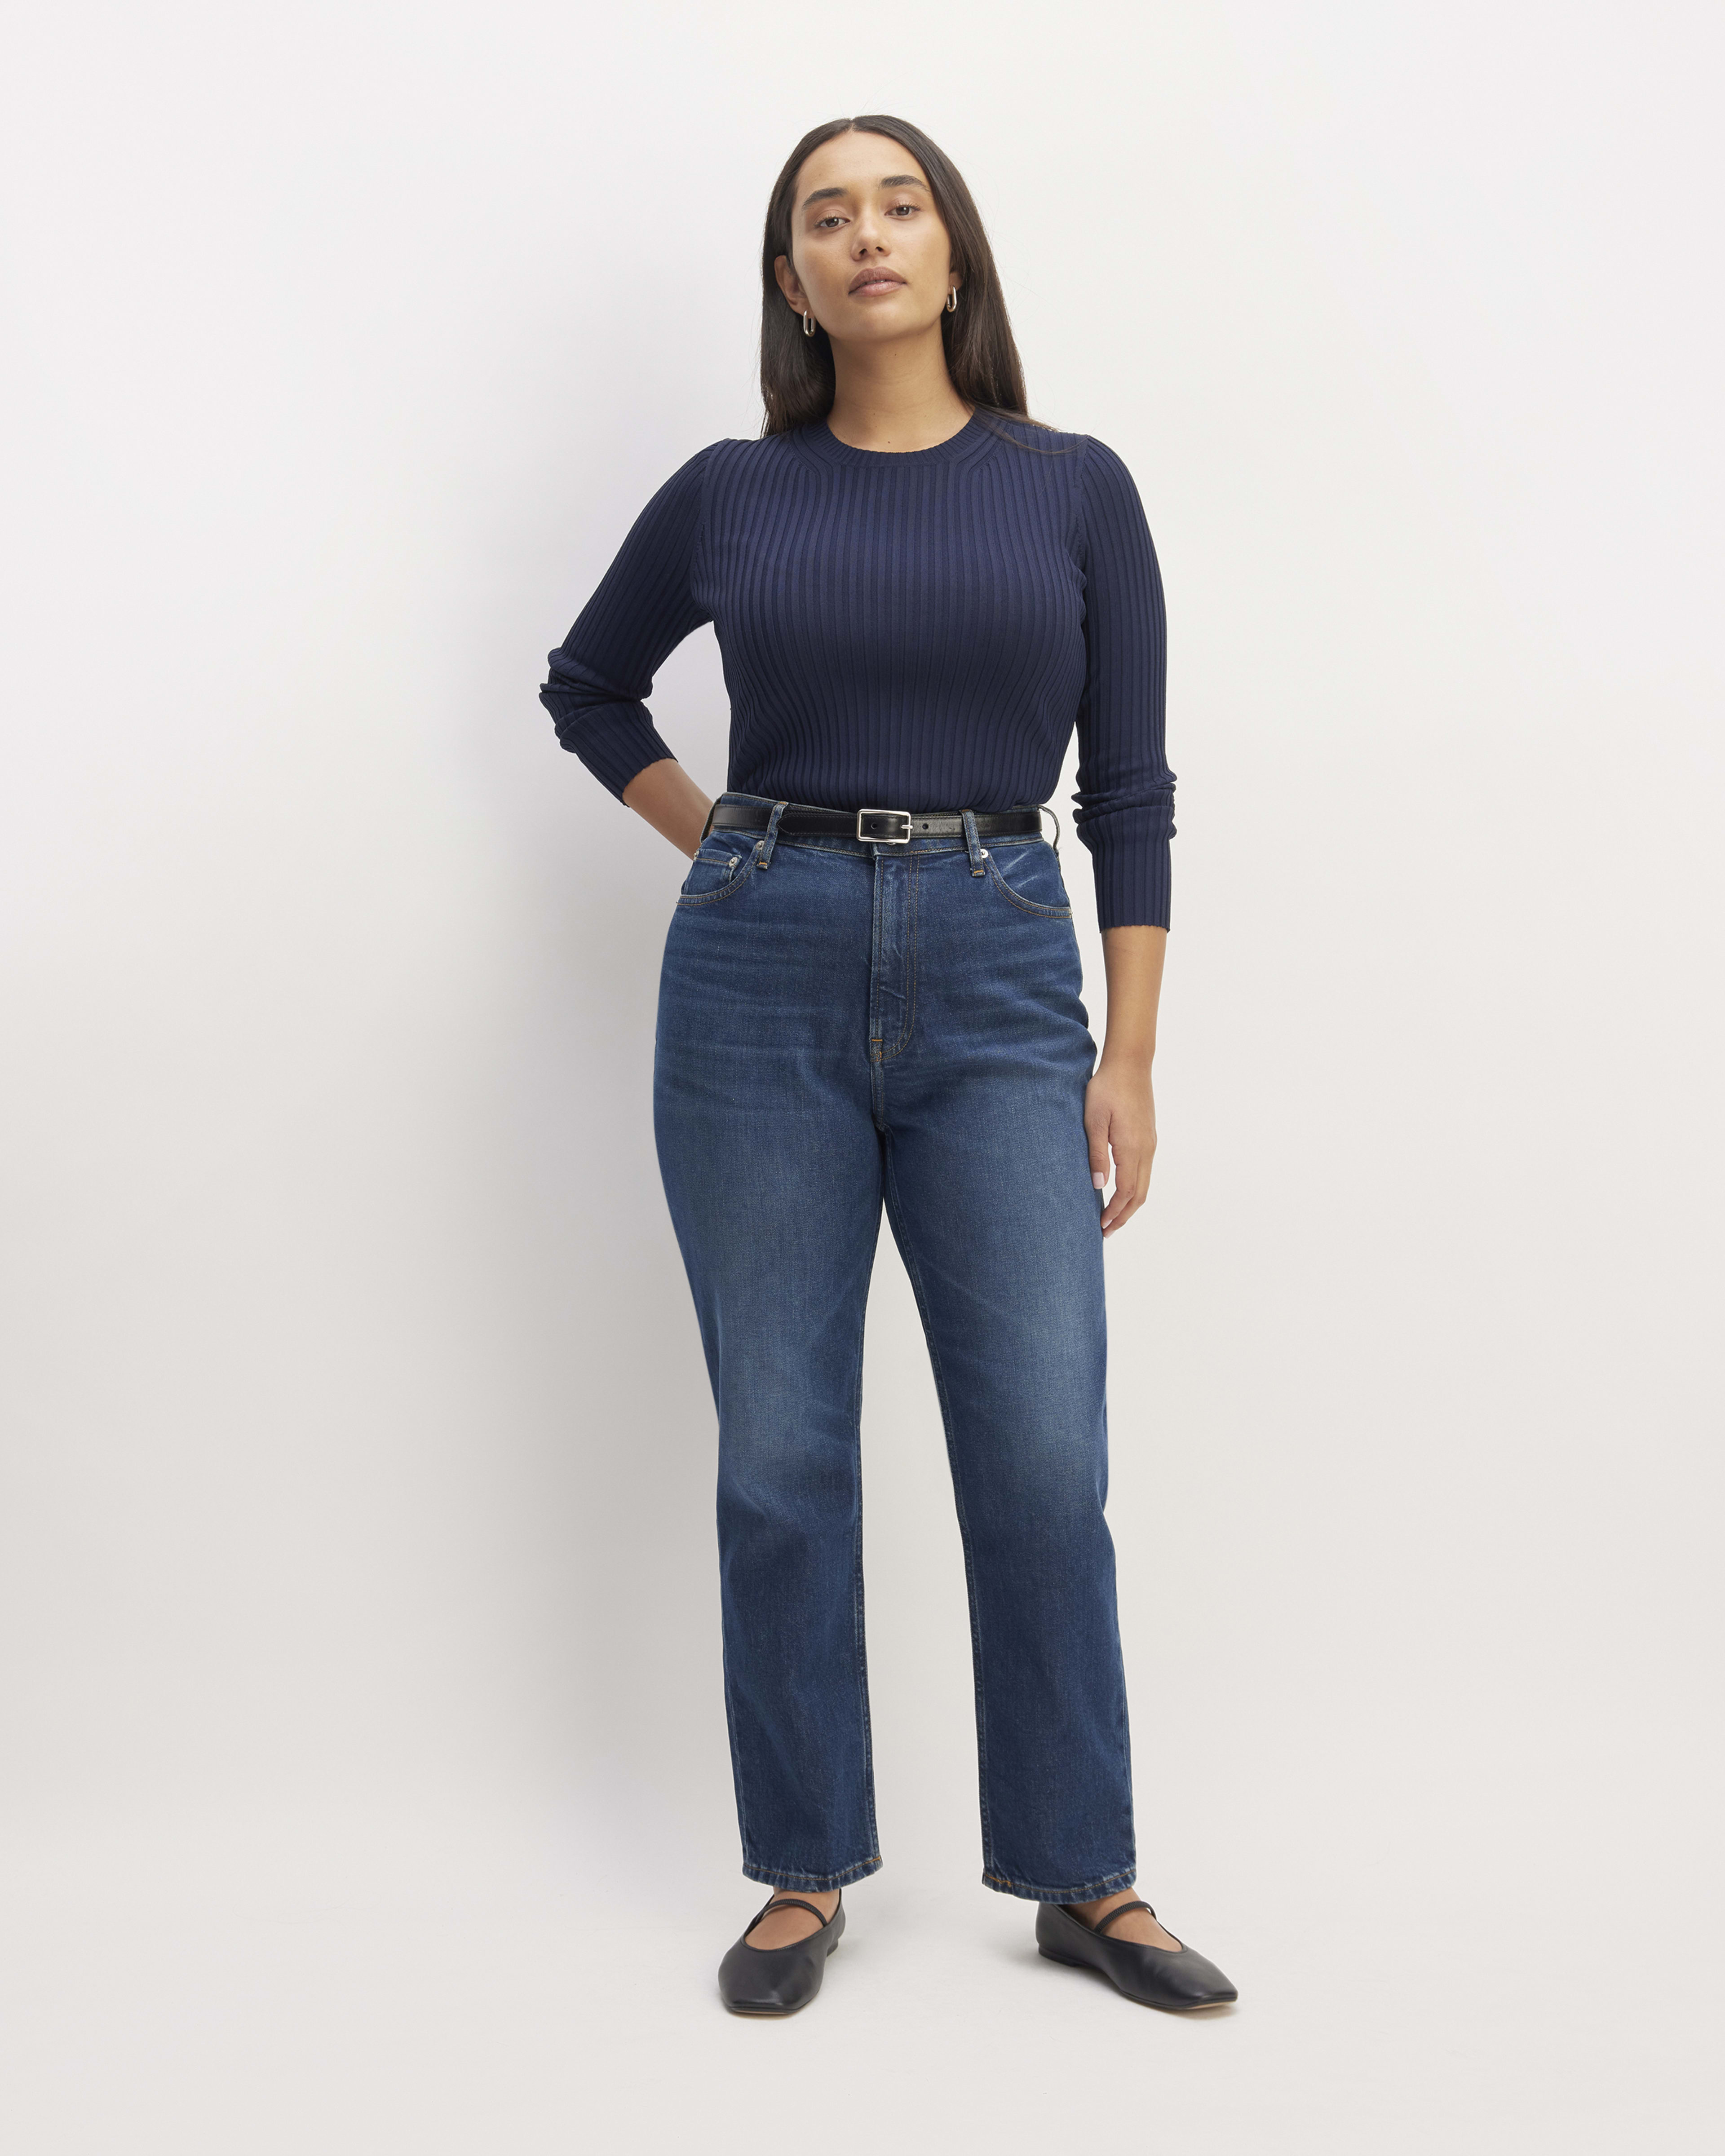 Women's Curvy Jeans & Denim